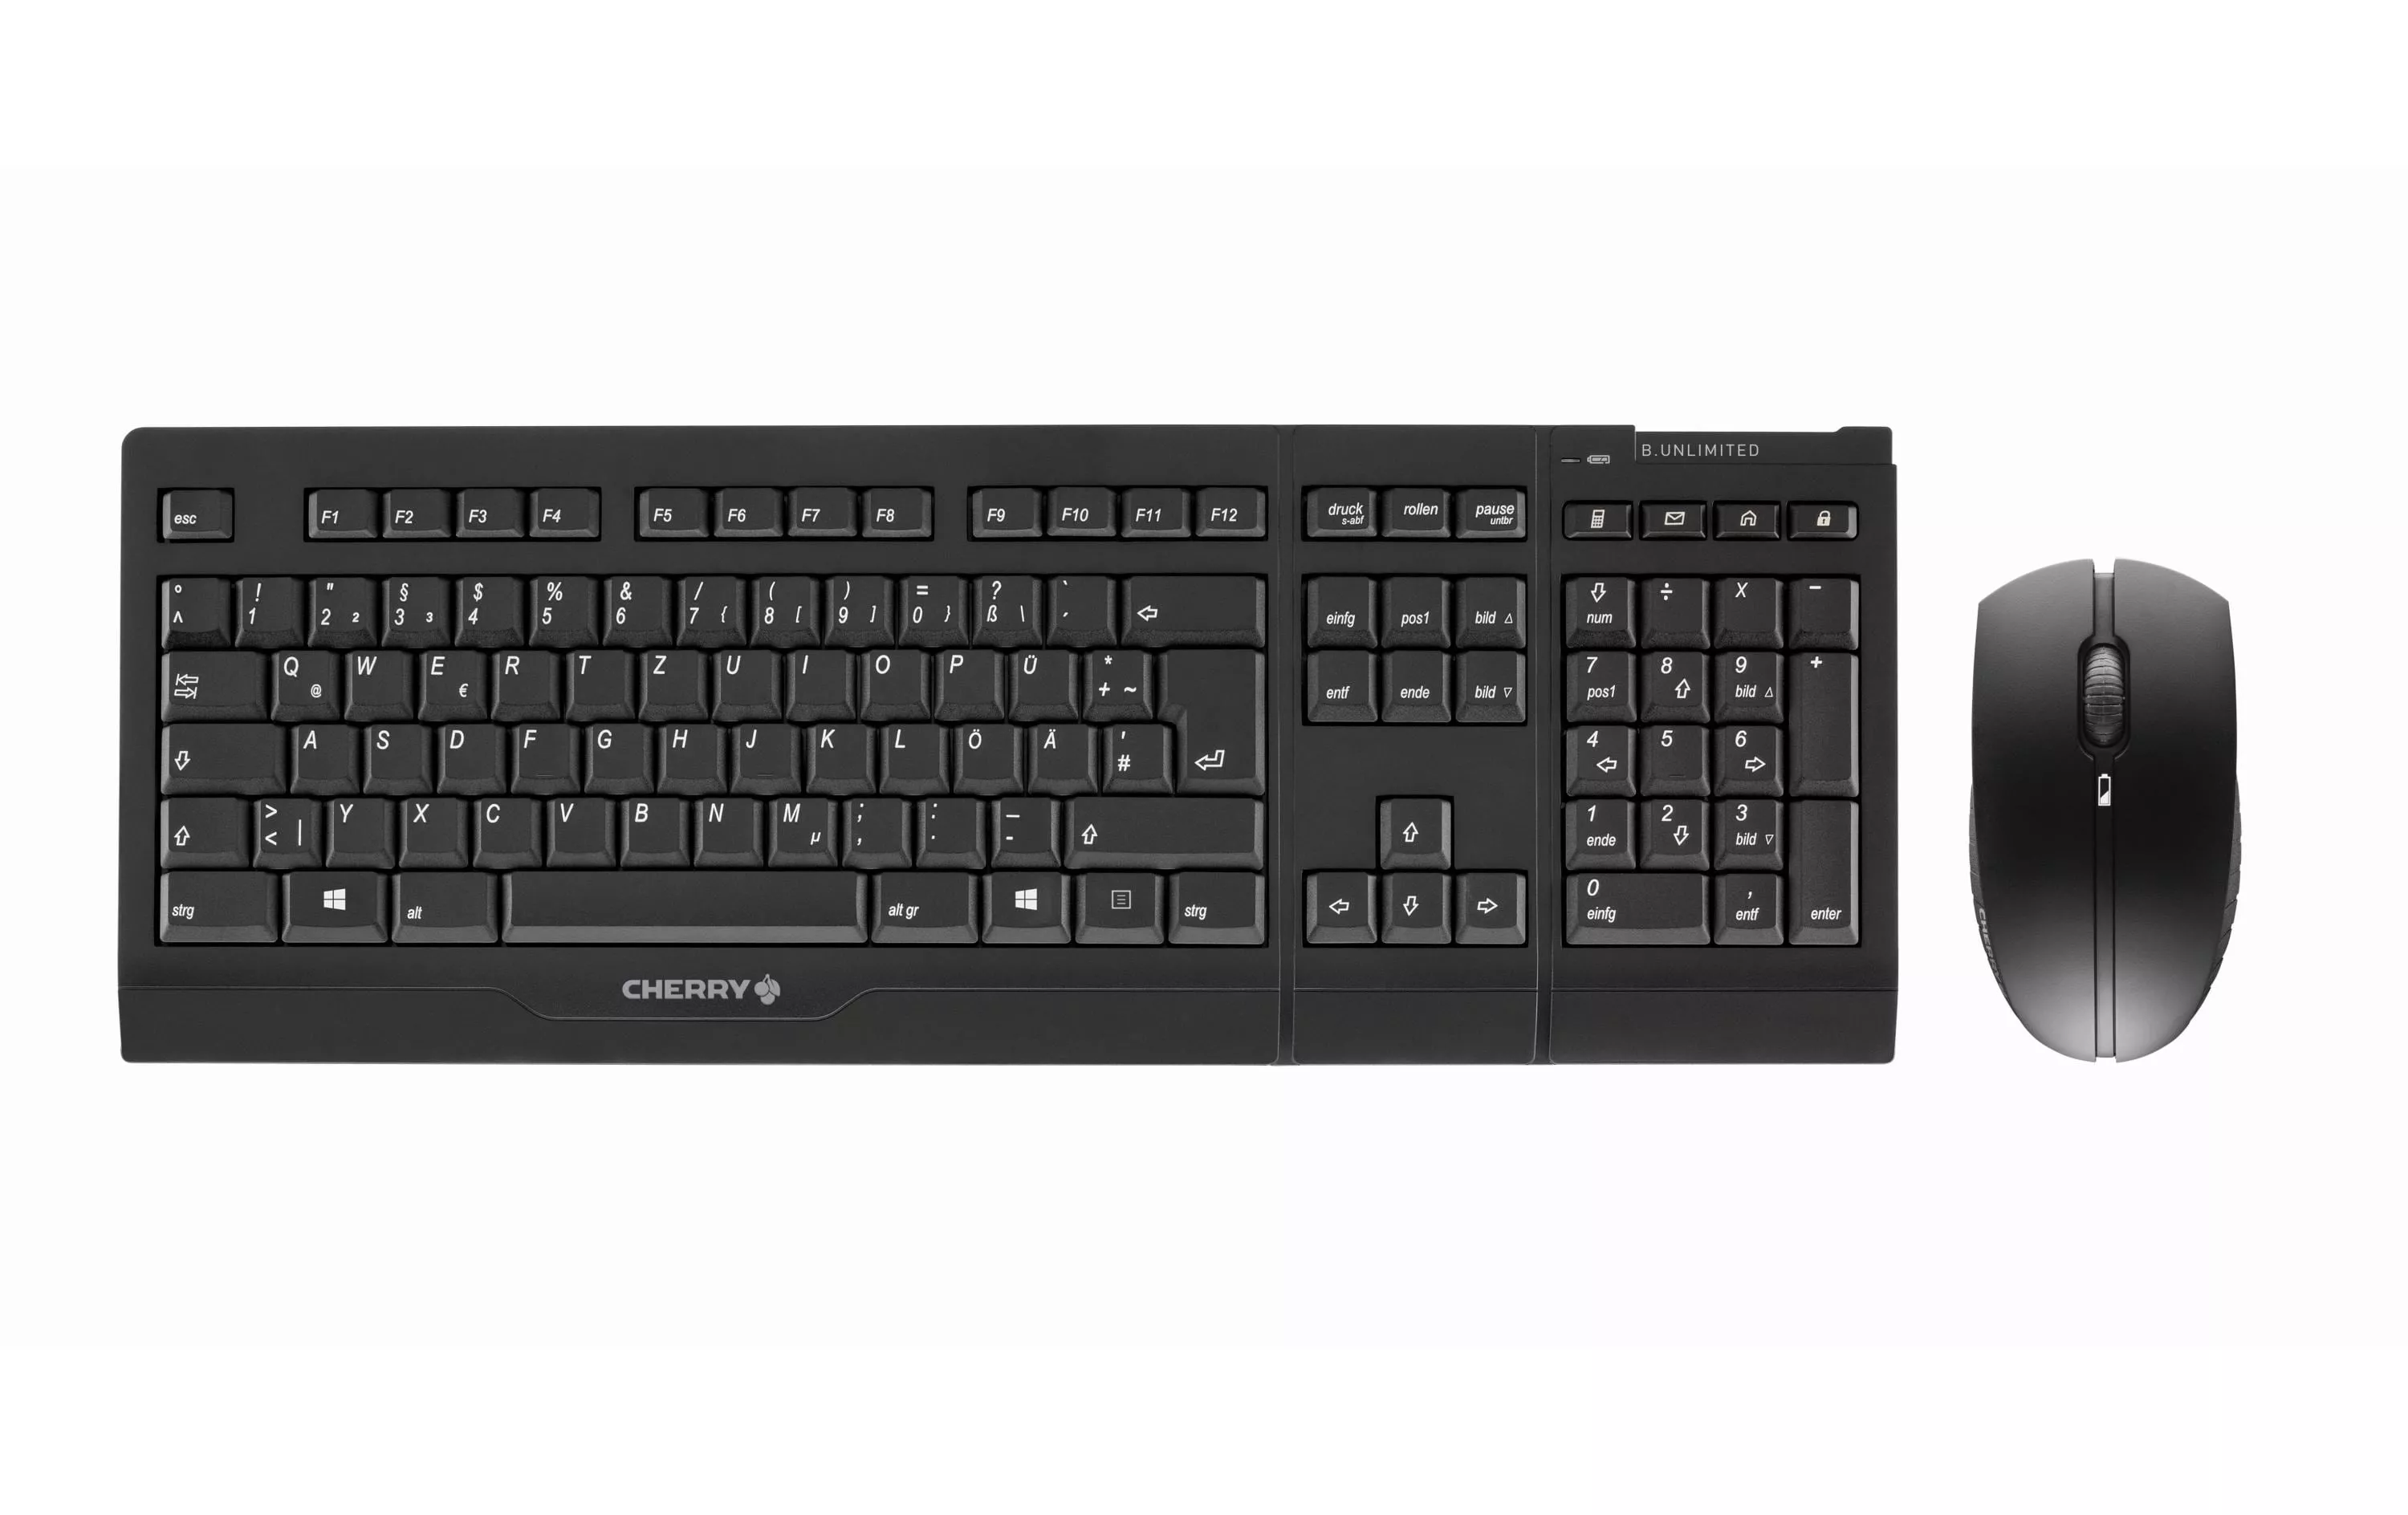 Keyboard-Mouse Set B.Unlimited 3.0